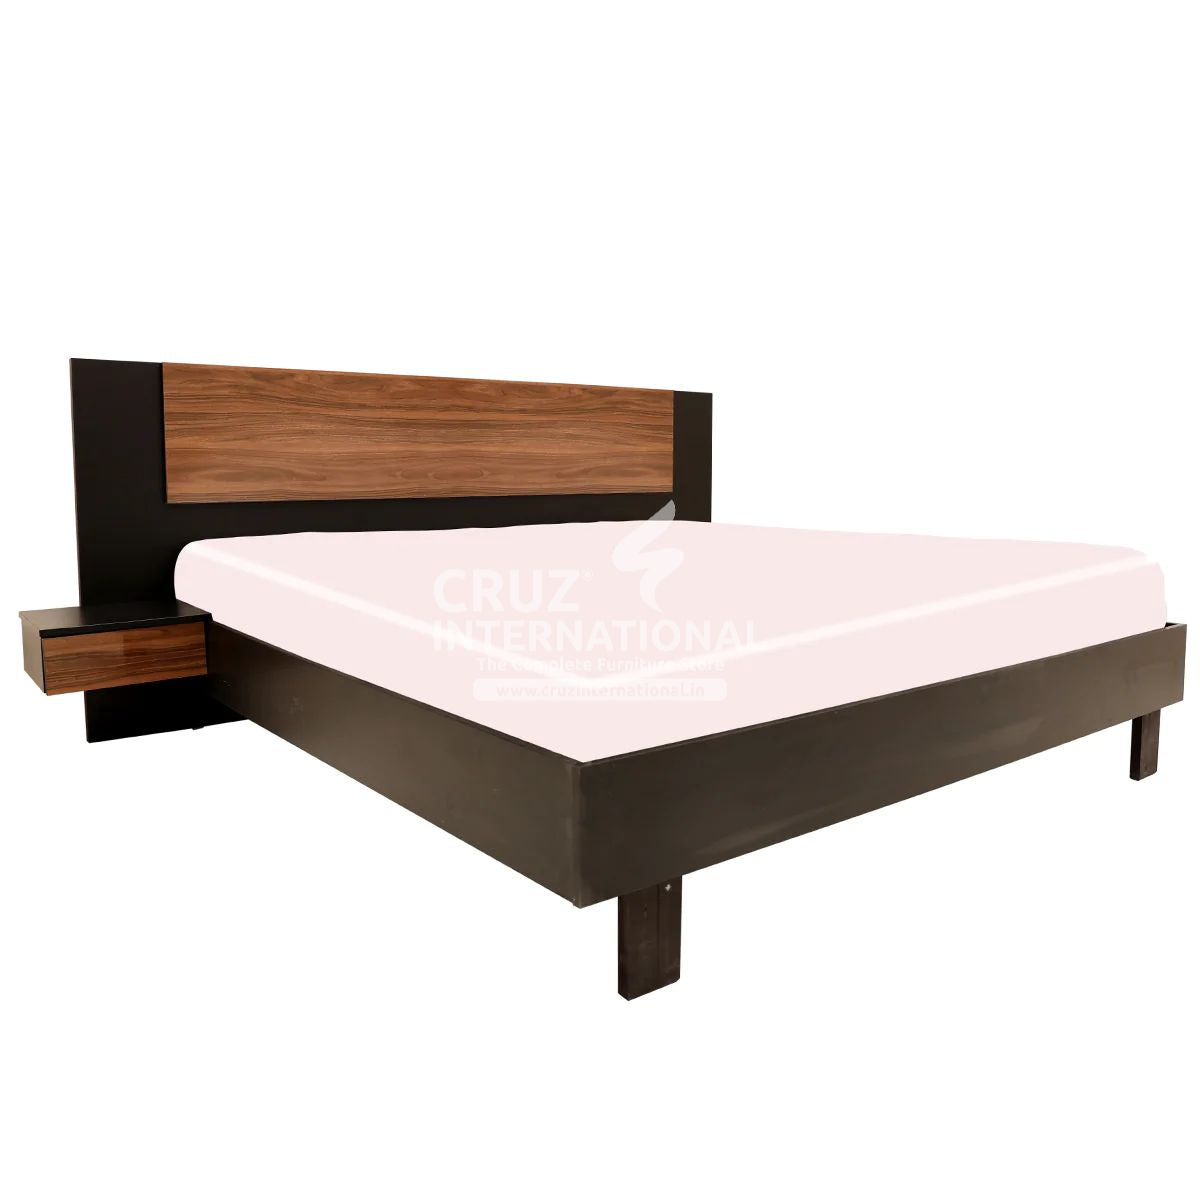 Modern Classic Gaia Bed | 2 Sizes Available CRUZ INTERNATIONAL